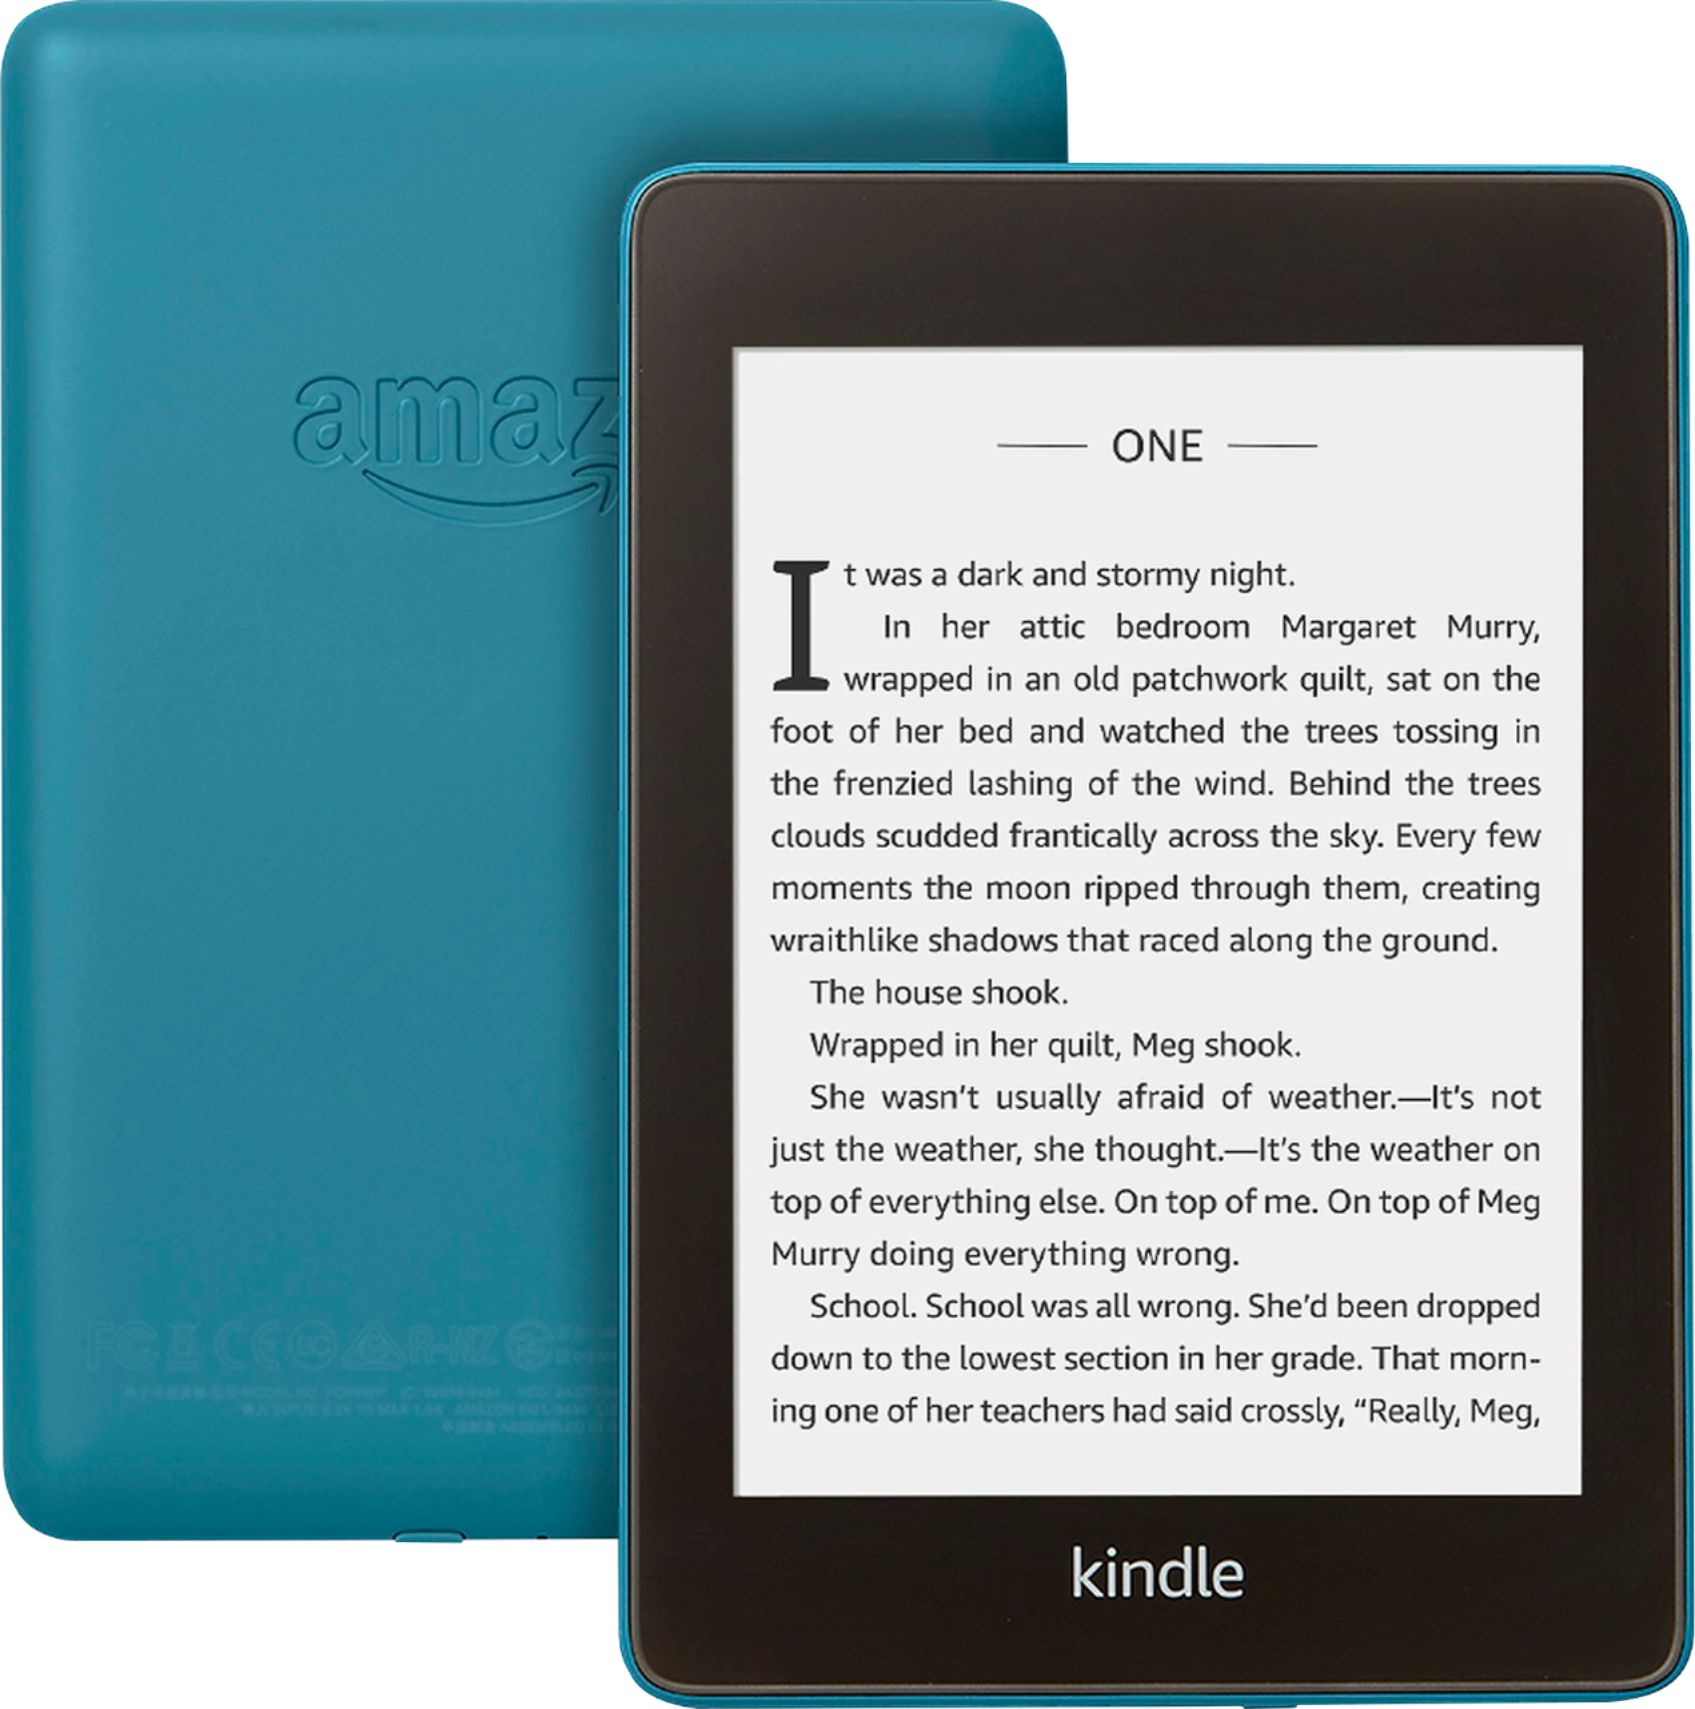 E-Readers: Kindles - Best Buy